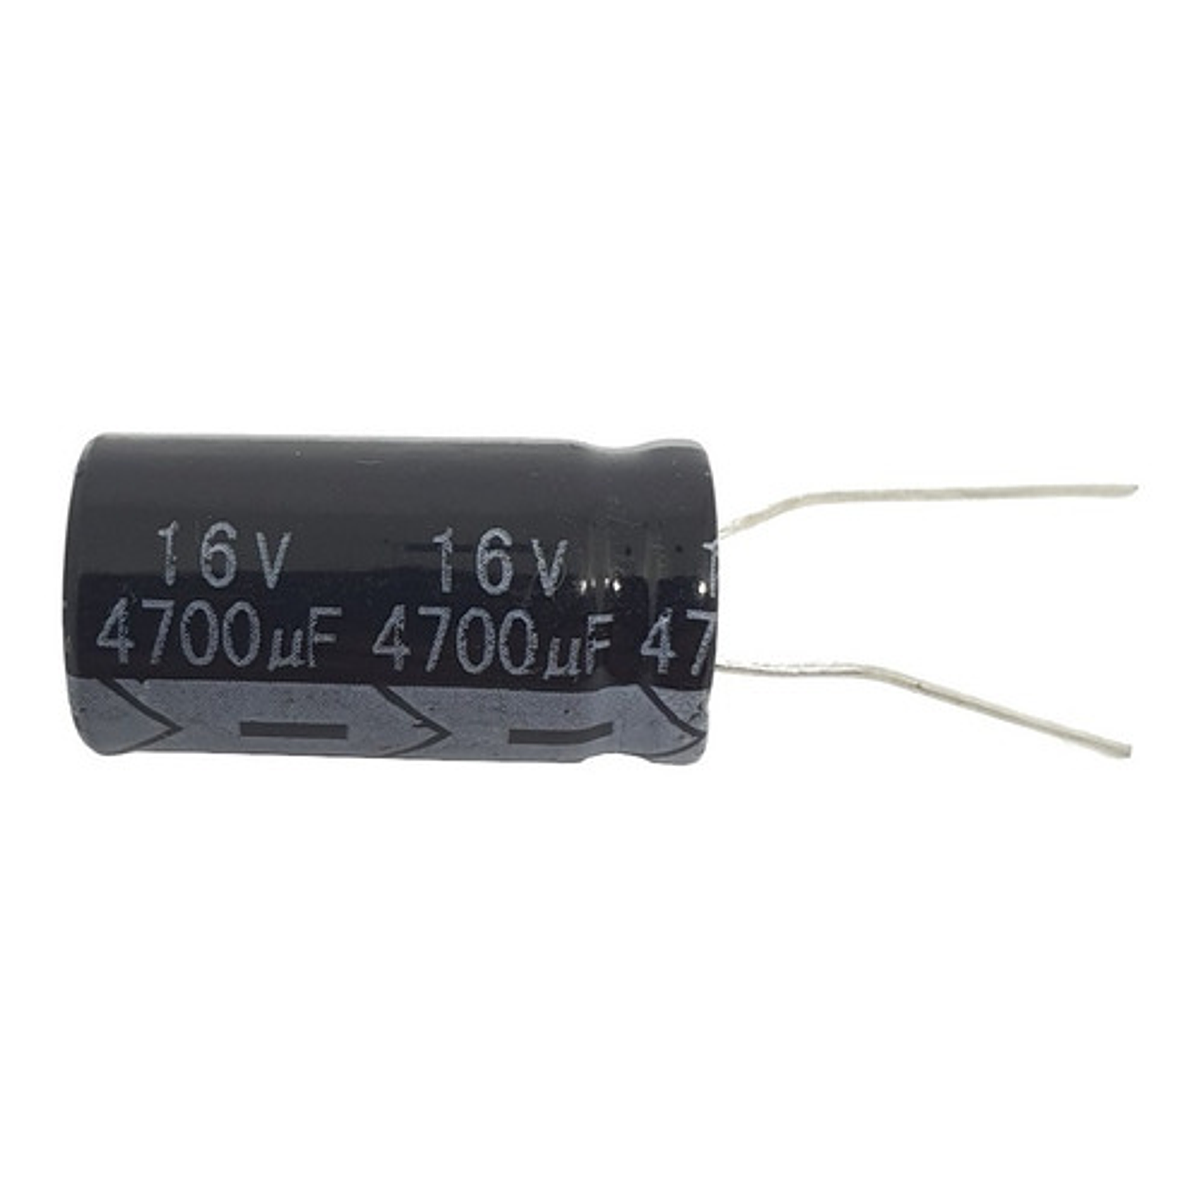 Condensador Electrolitico 4700uf X 16v Pack 5 Unidades